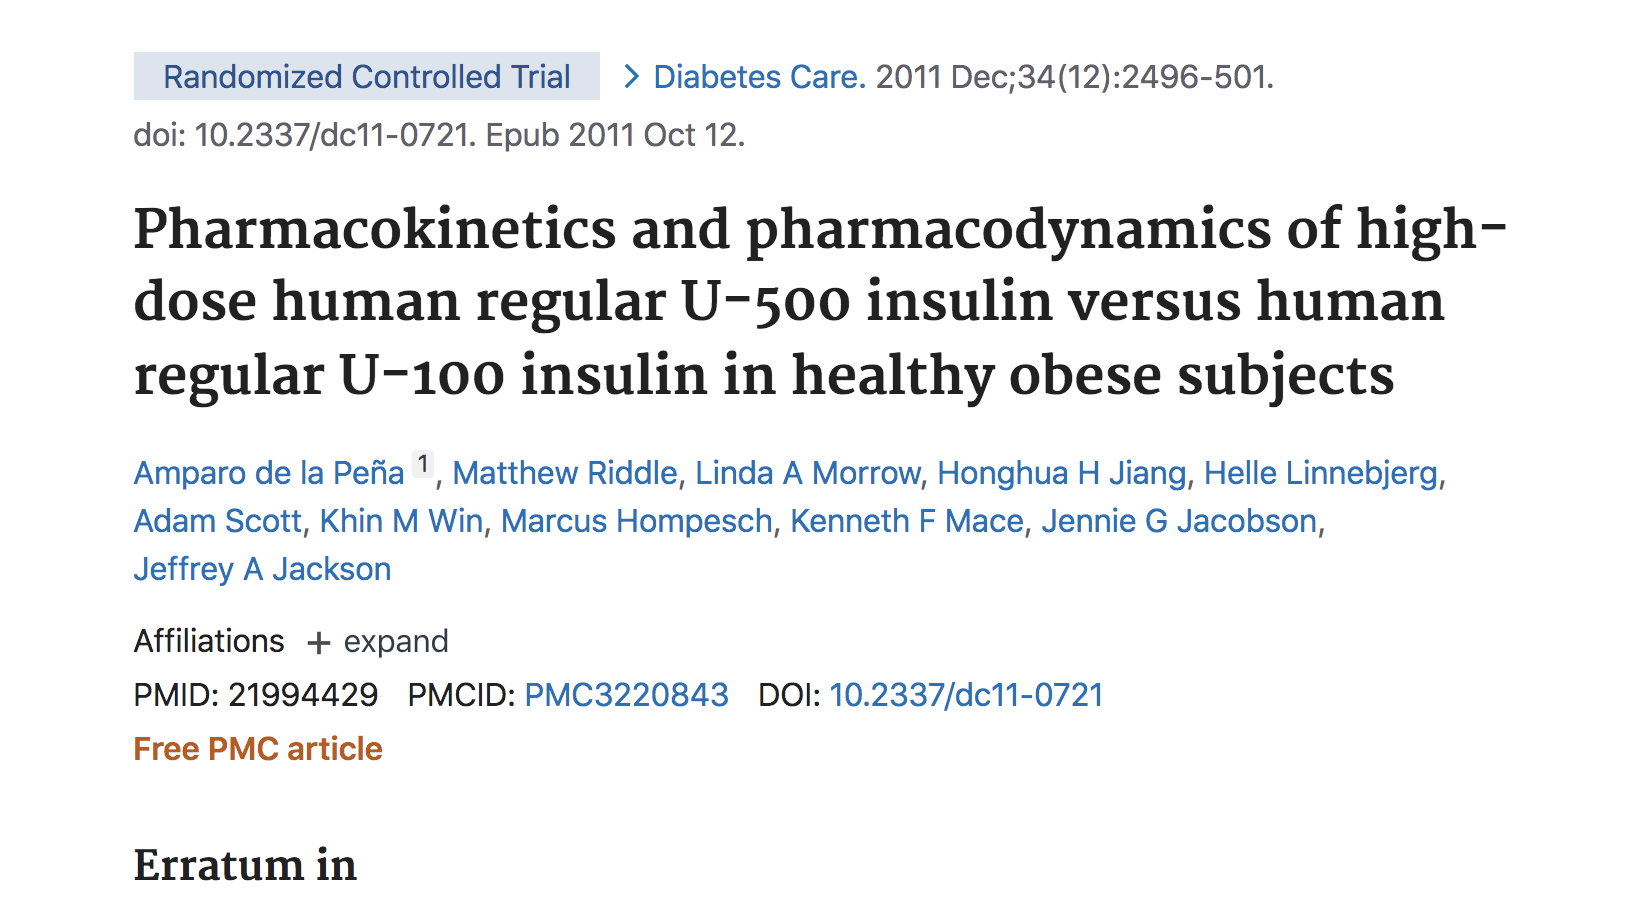 image of Pharmacokinetics and pharmacodynamics of high-dose human regular U-500 insulin versus human regular U-100 insulin in healthy obese subjects.